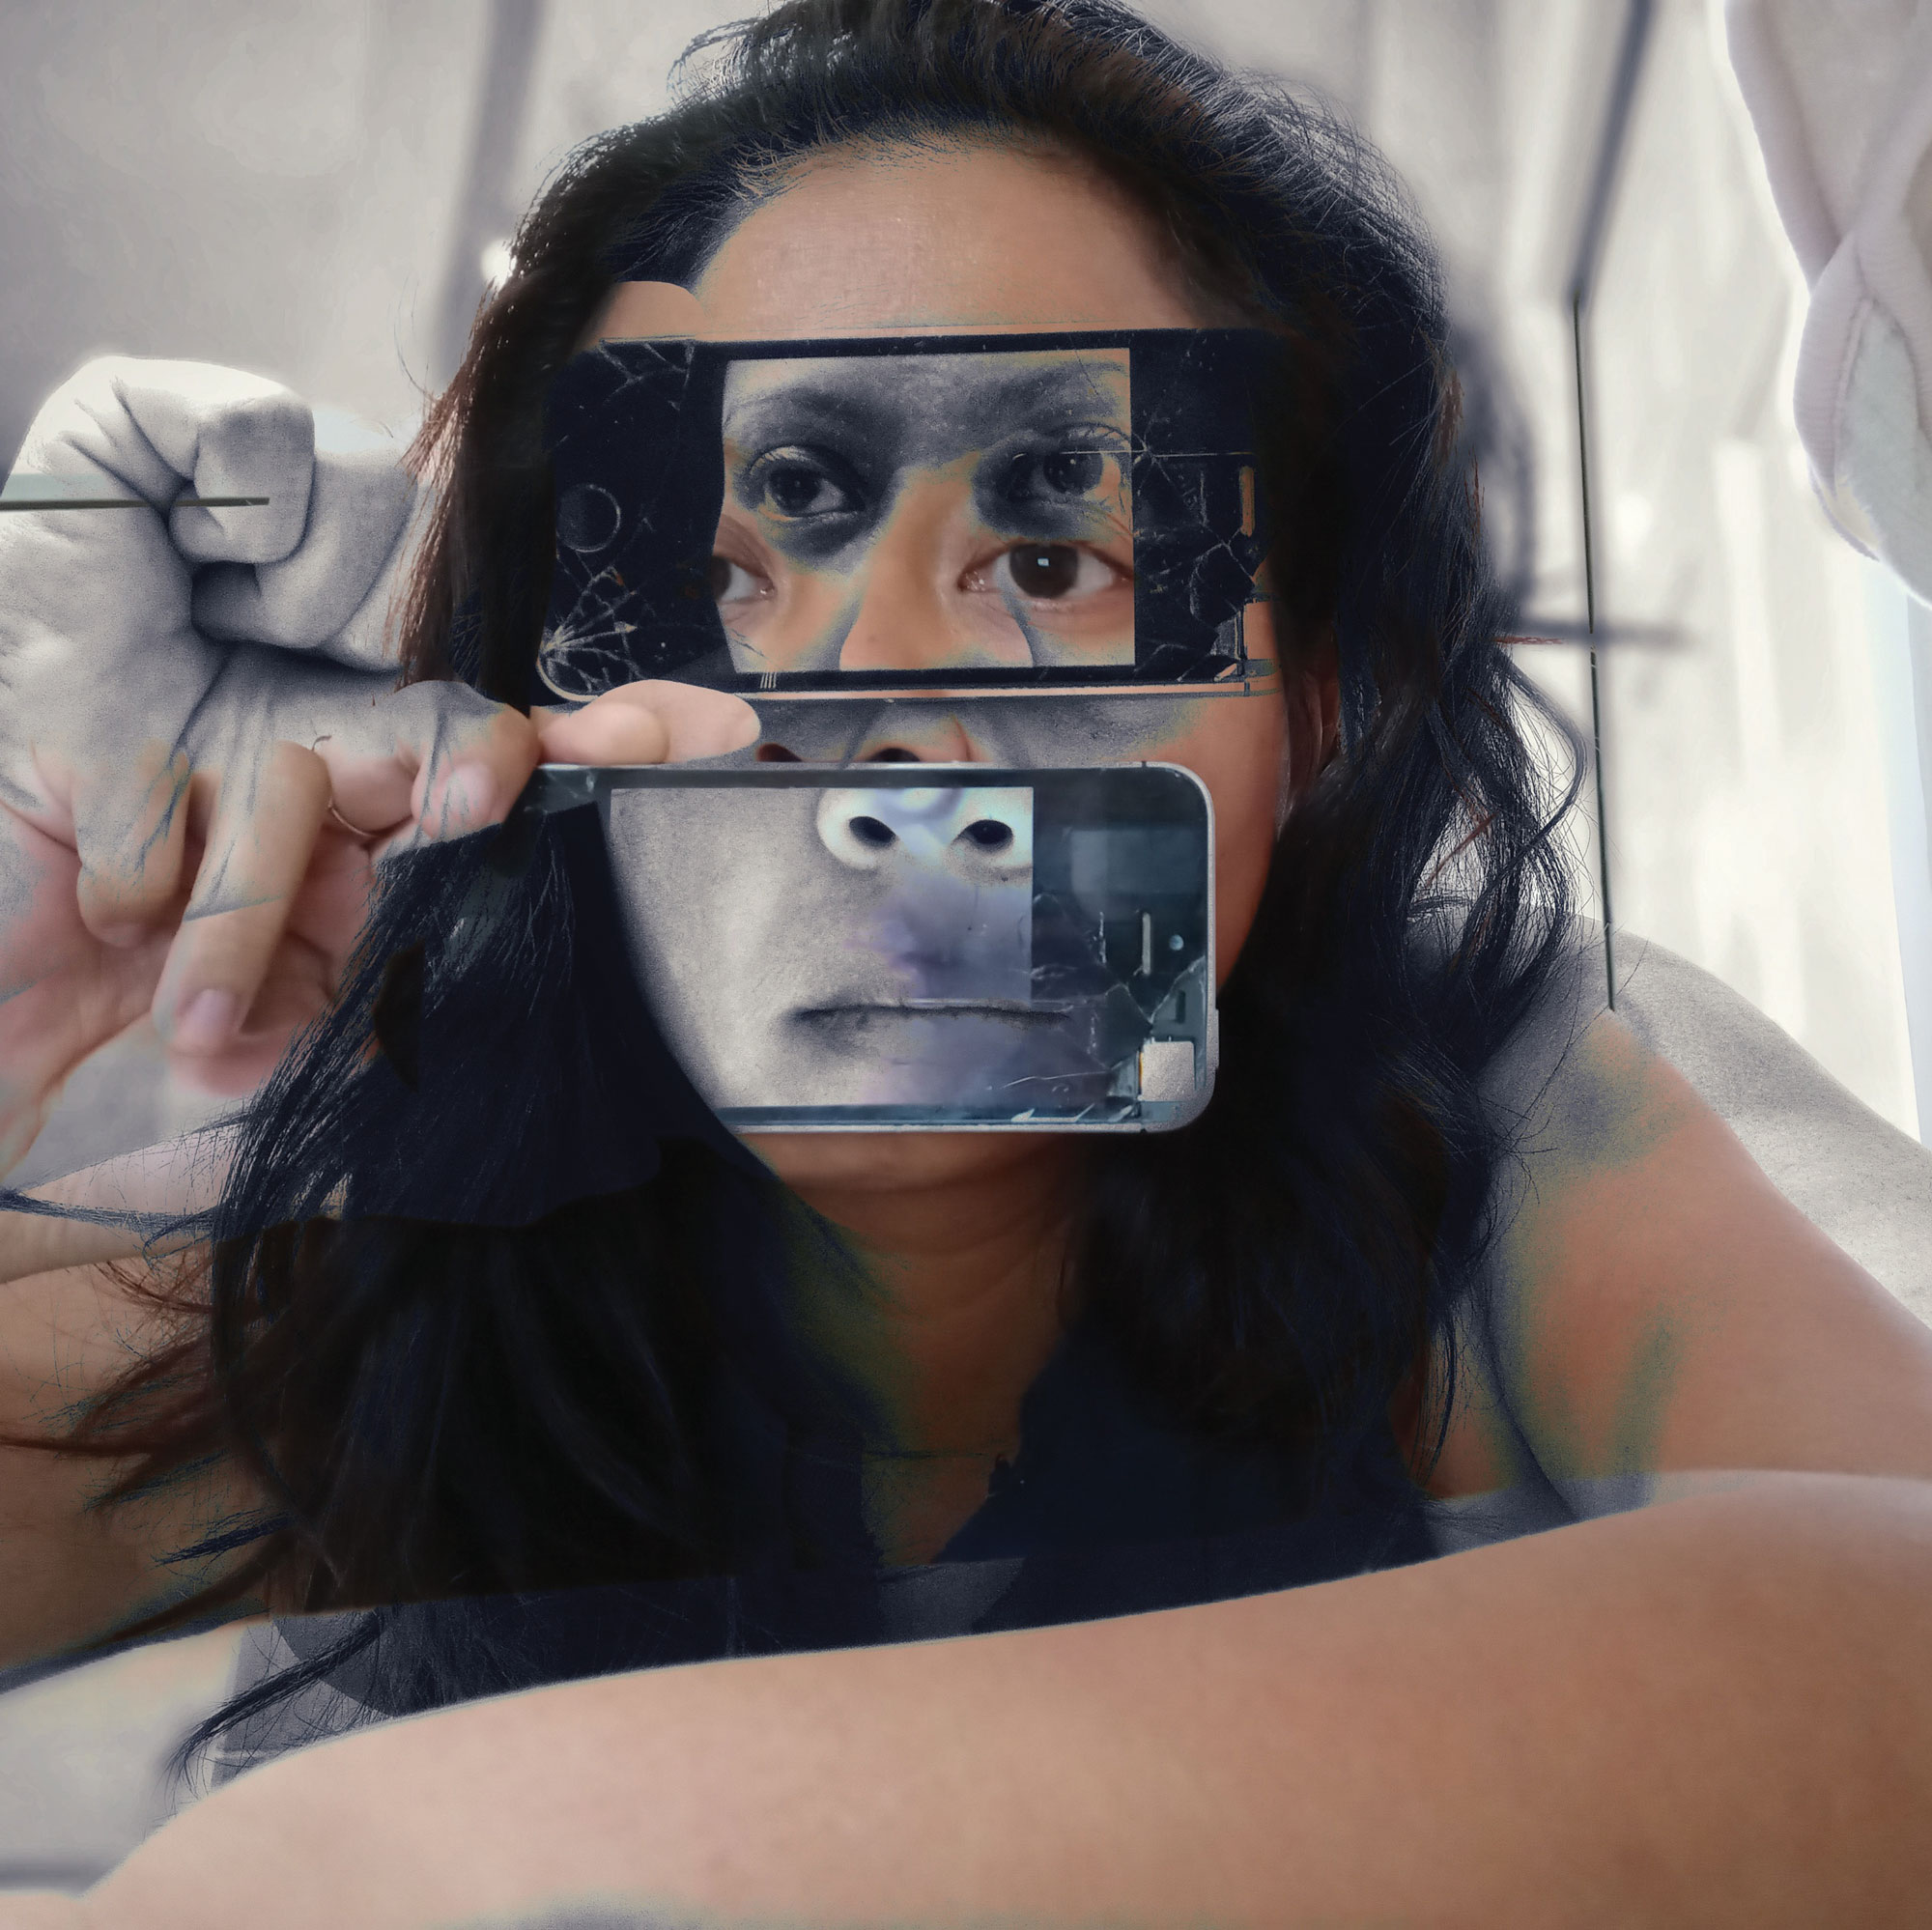 Jeaniel Image, Digital Selfie, Personal Data, 2020